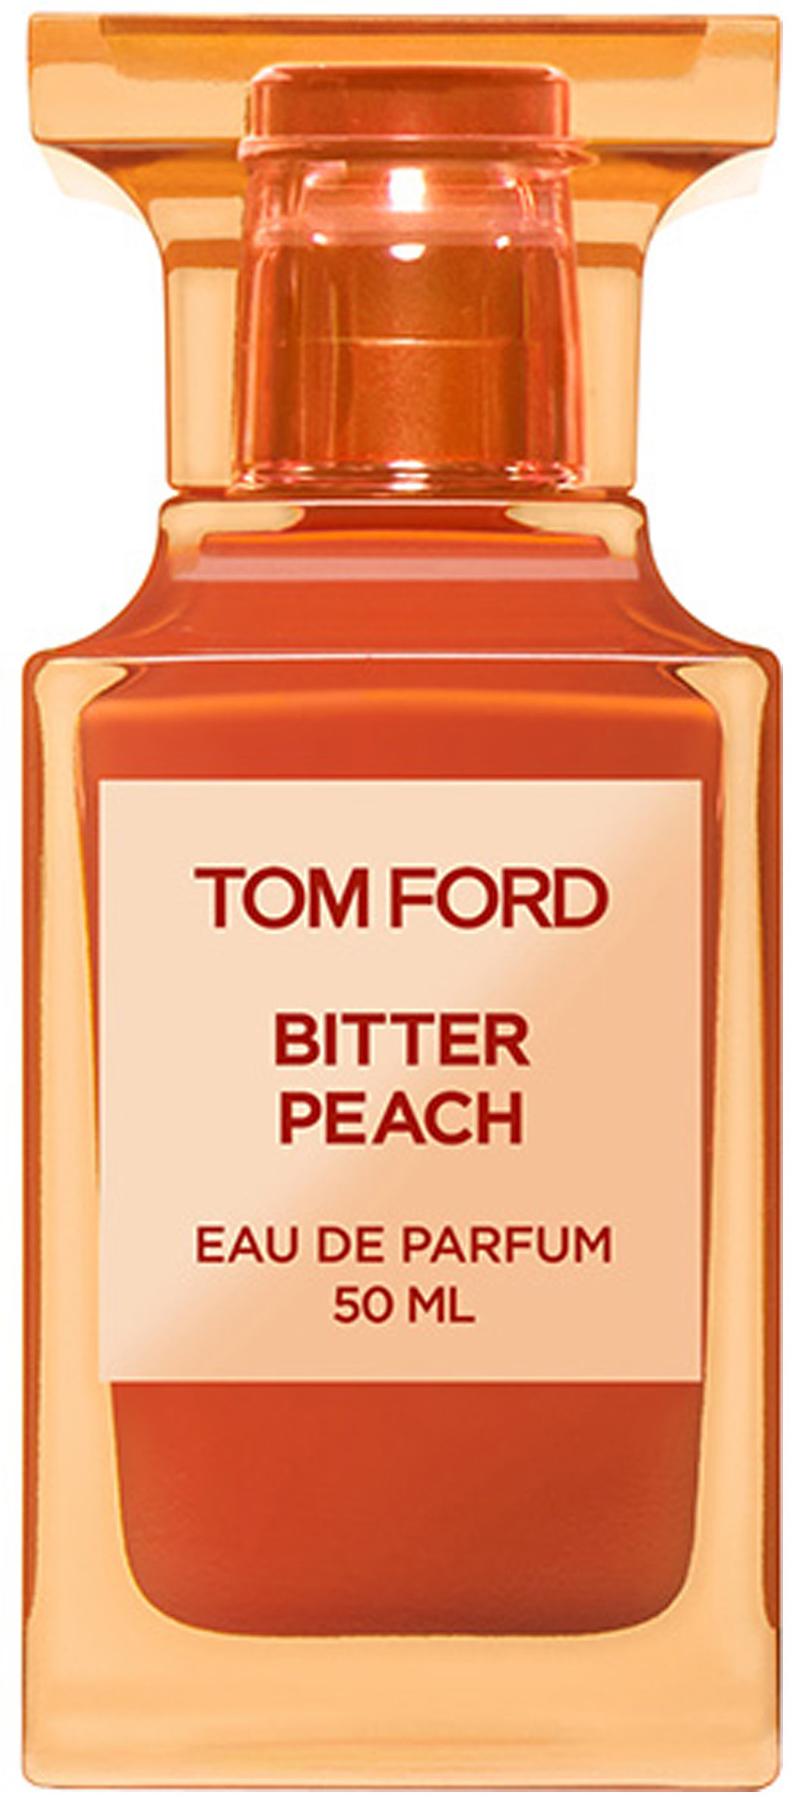 Tom Ford - Bitter Peach EdP 50 ml